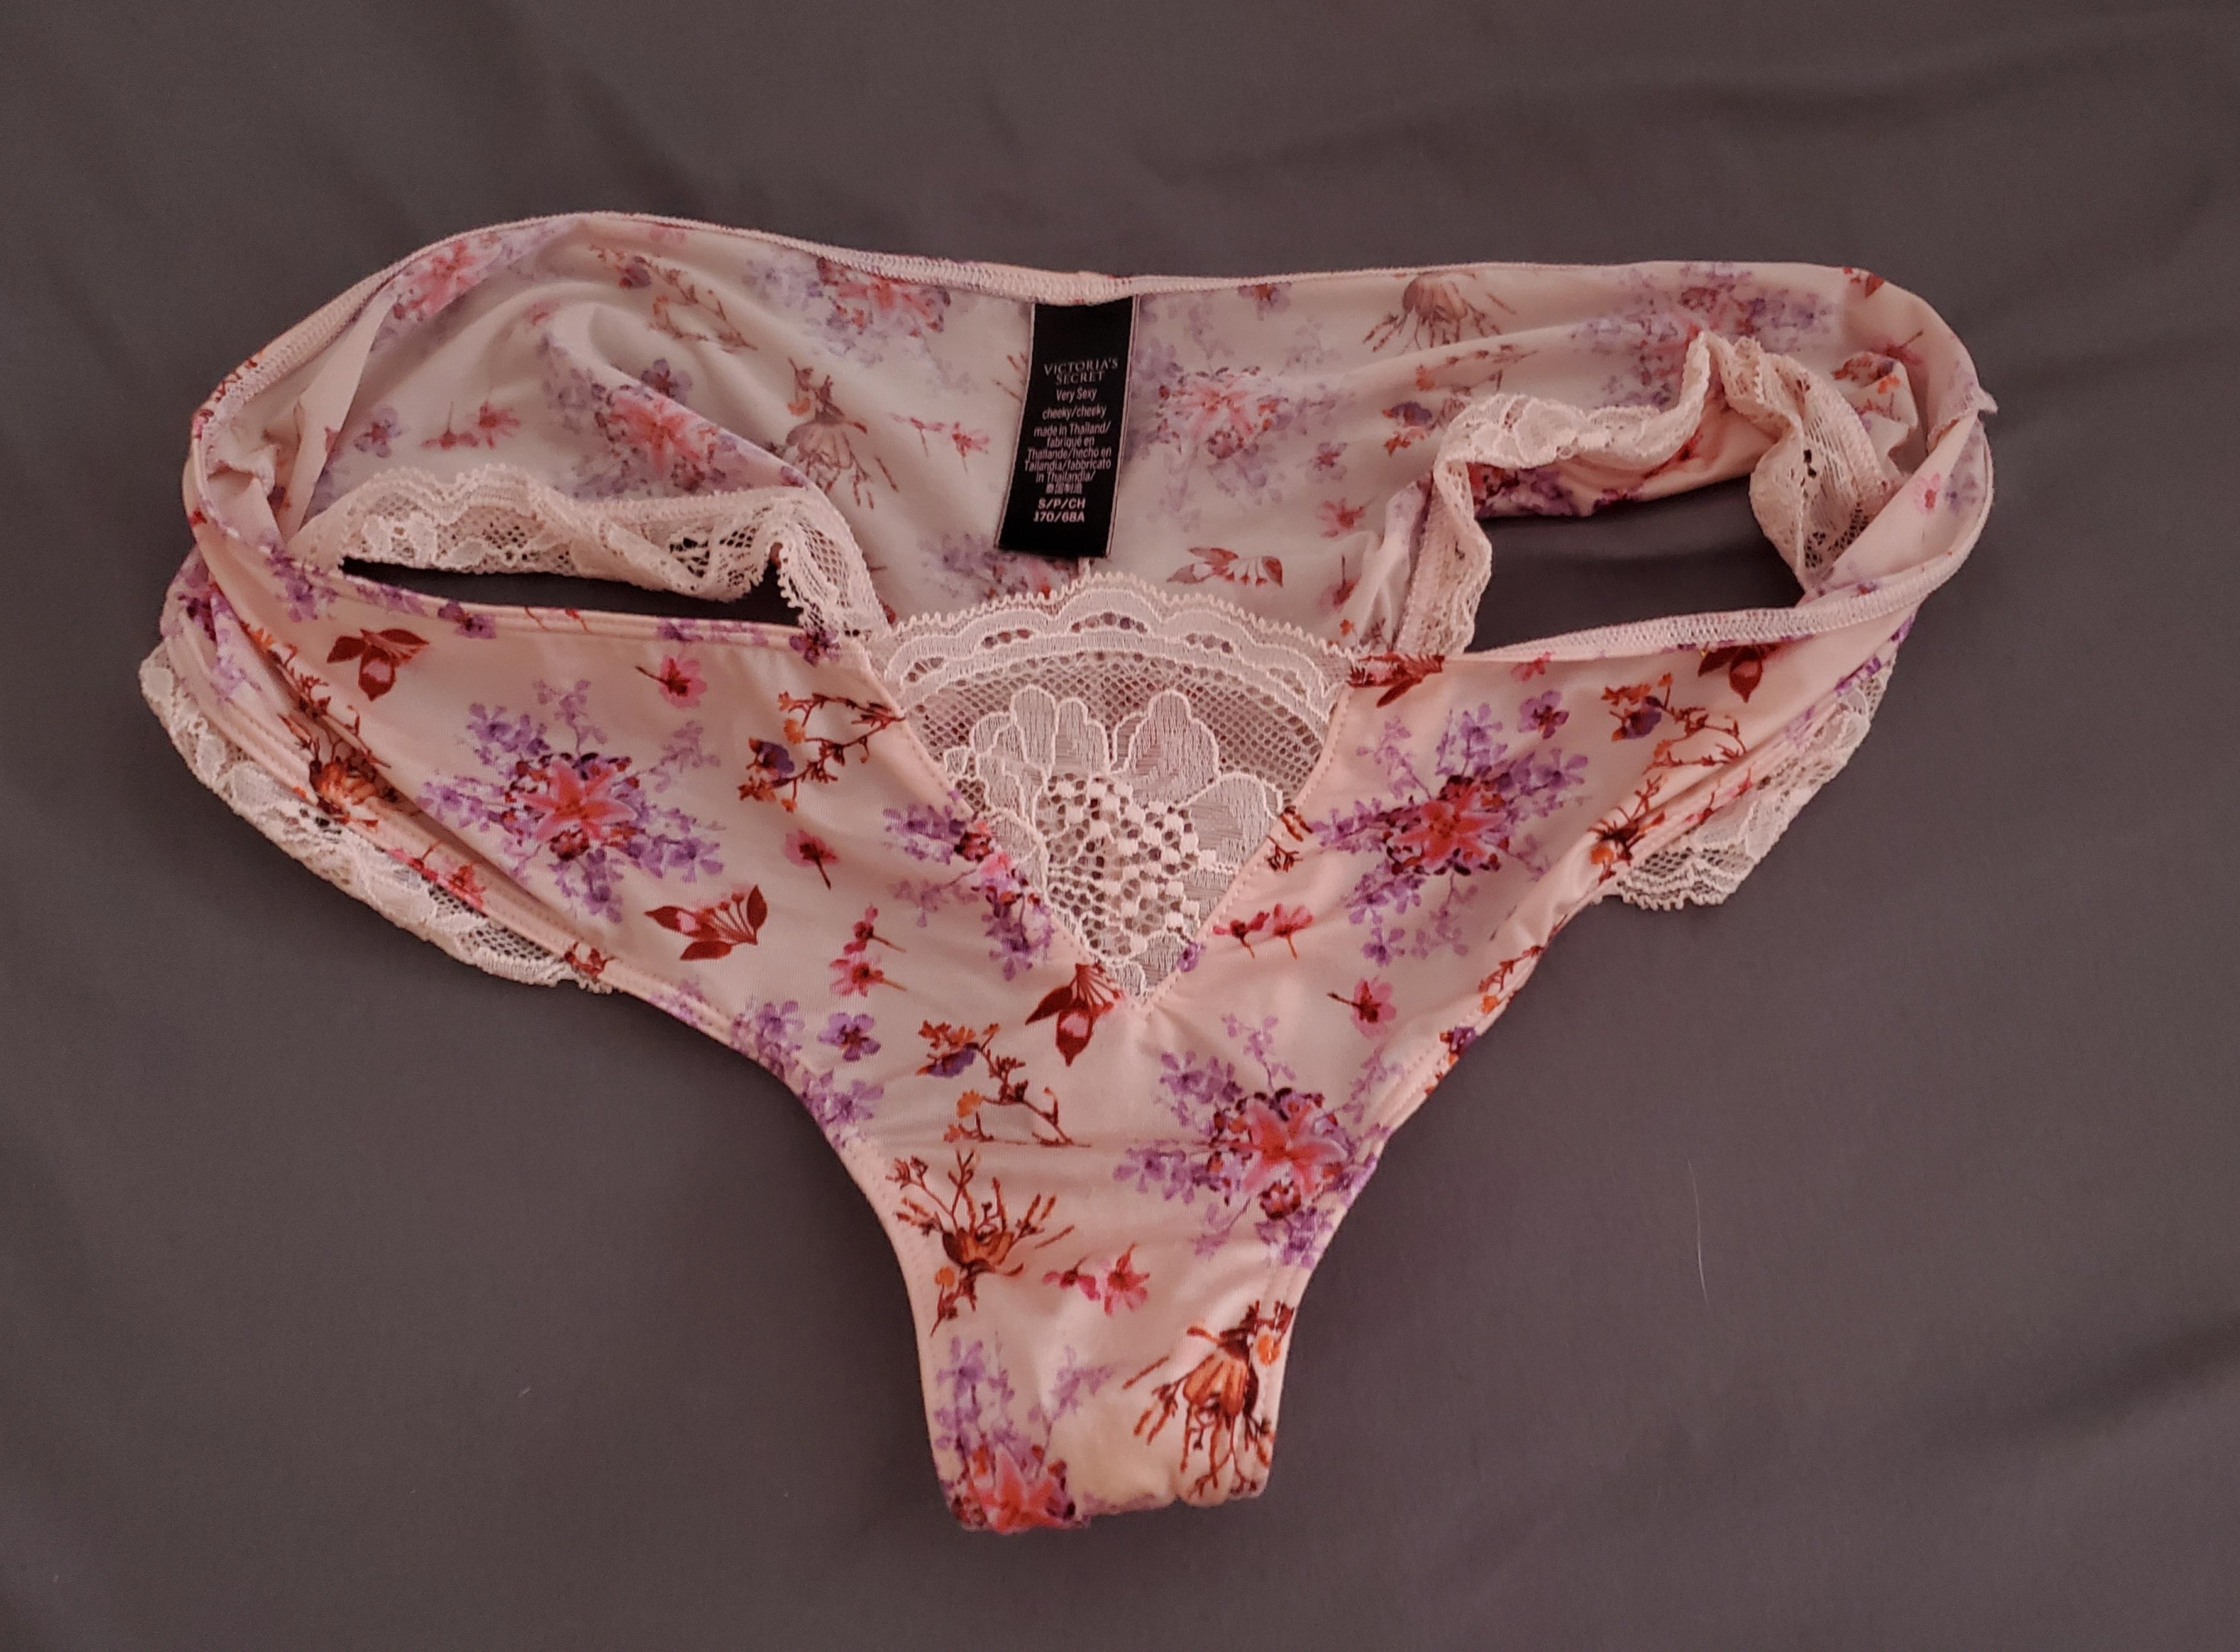 The panties my sister wore yesterday | Scrolller